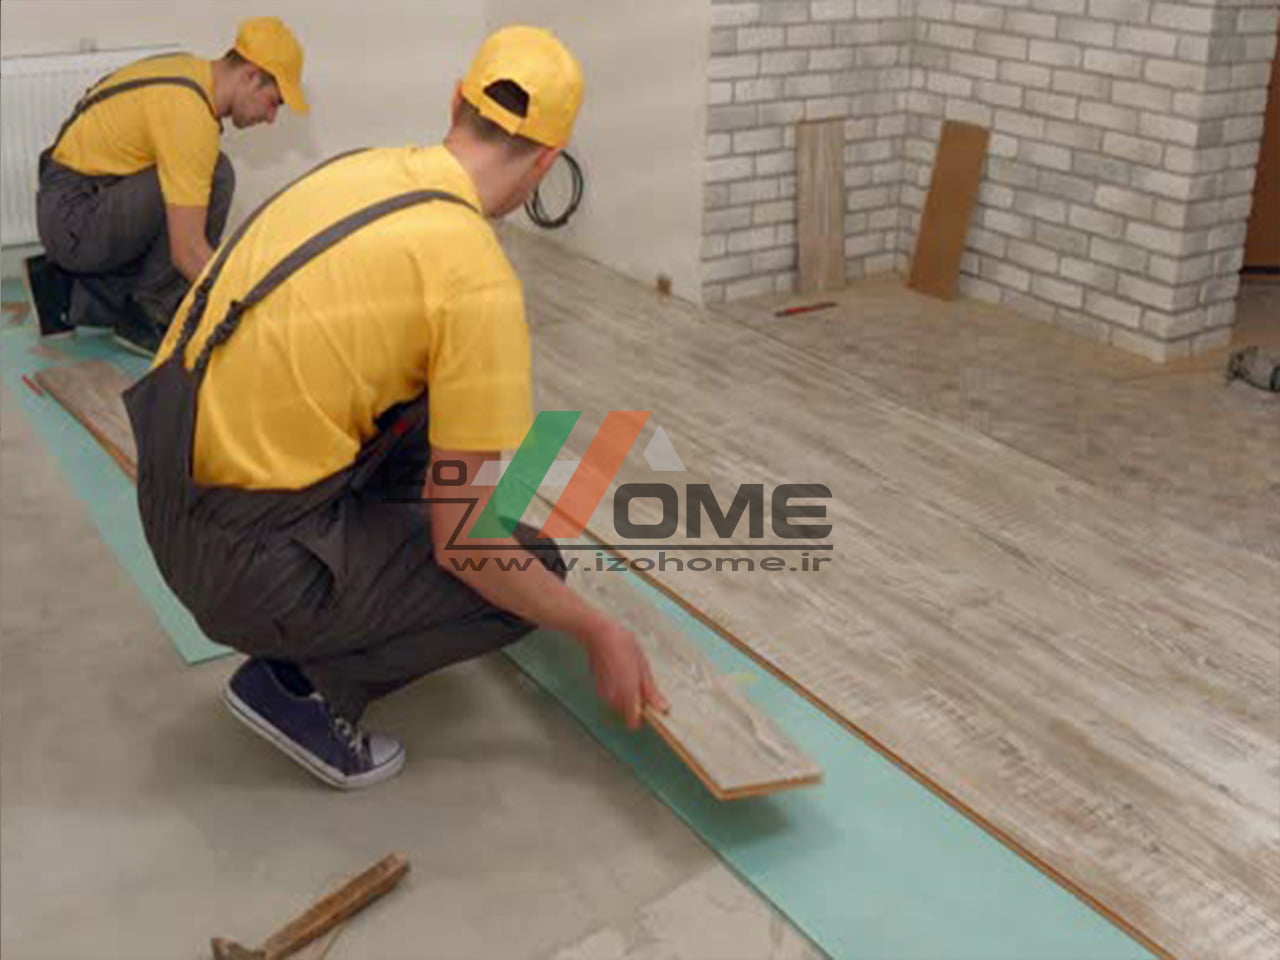 izohome35 - Sound insulation for the floor